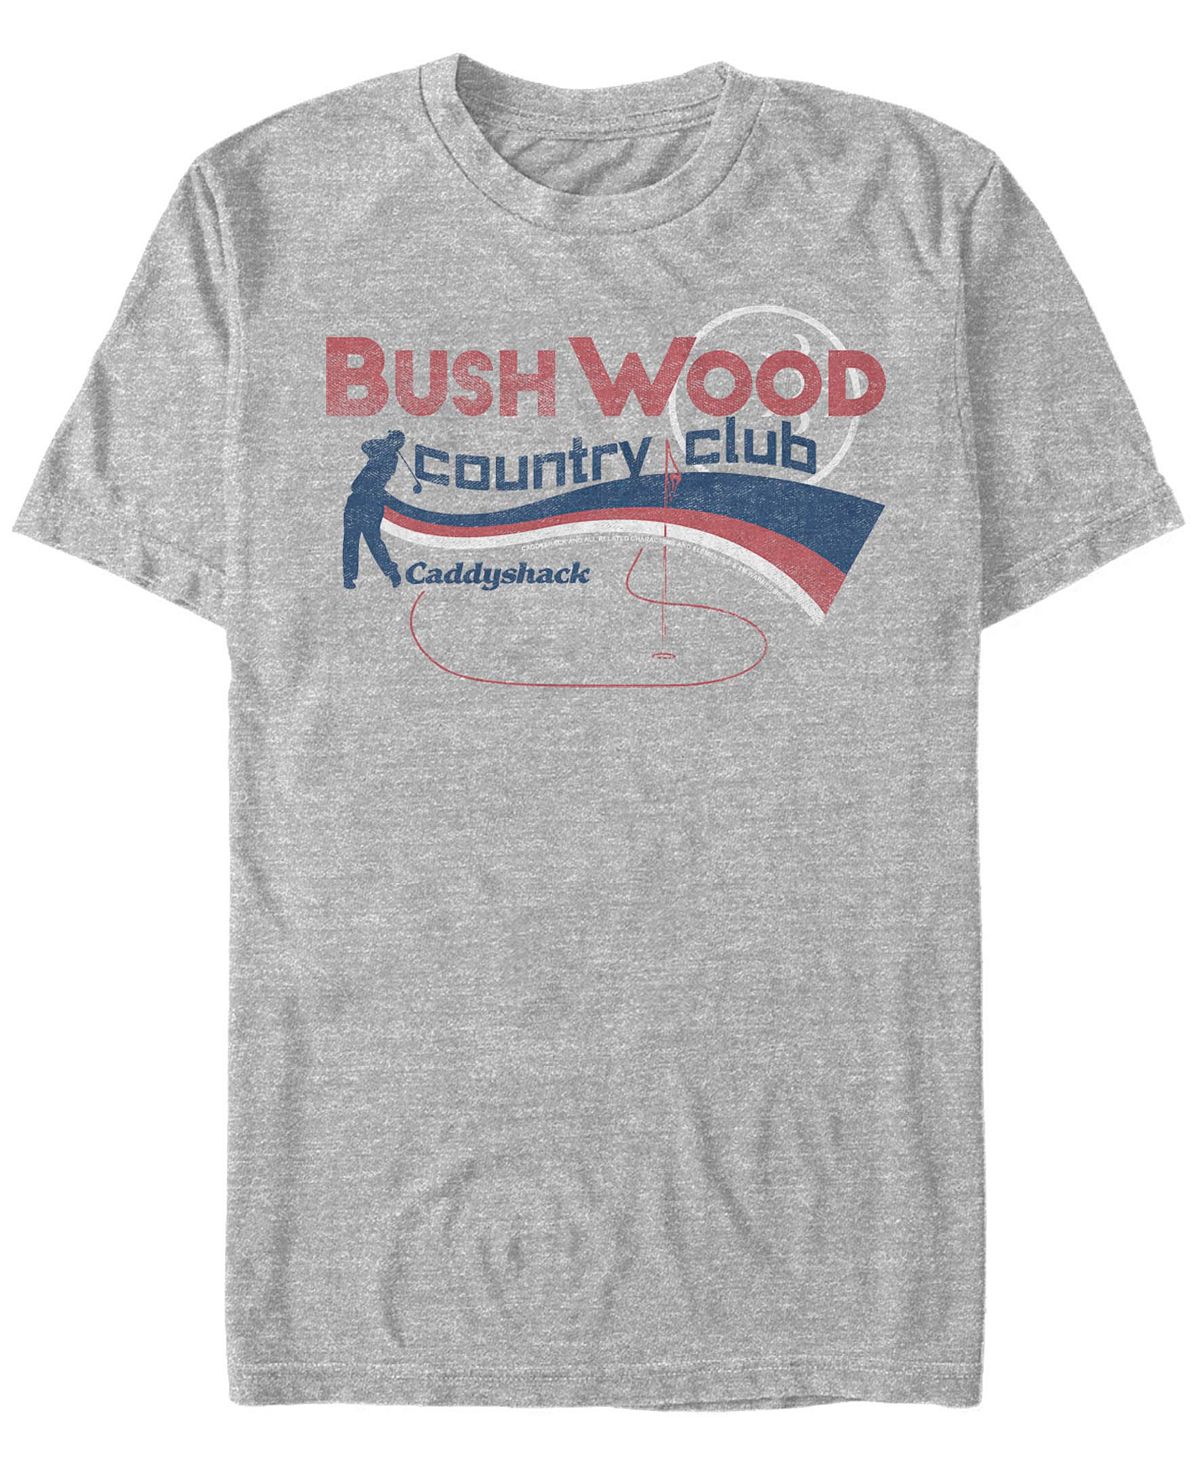 Мужская футболка Caddyshack Bushwood Club Line с коротким рукавом Fifth Sun мужская футболка nerf blasters line art с коротким рукавом fifth sun синий